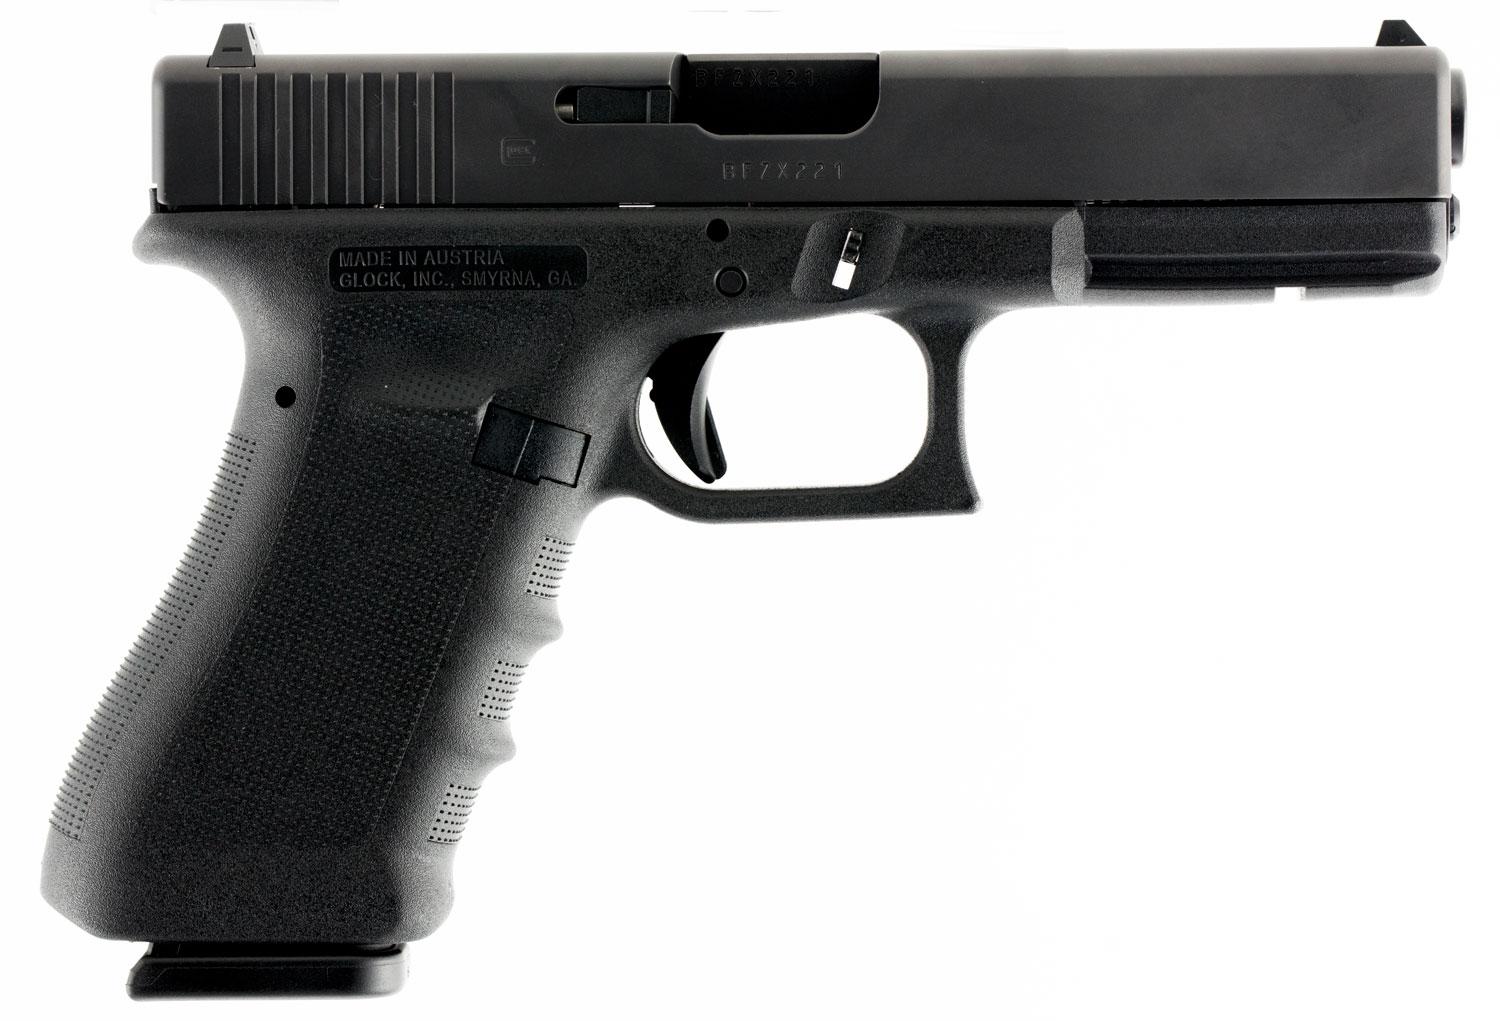 Glock G17 Gen3 RTF Pistol PT1750203, 9mm Luger, 4.48", Black Polymer Grip/Frame, Black Finish, 17 Rd